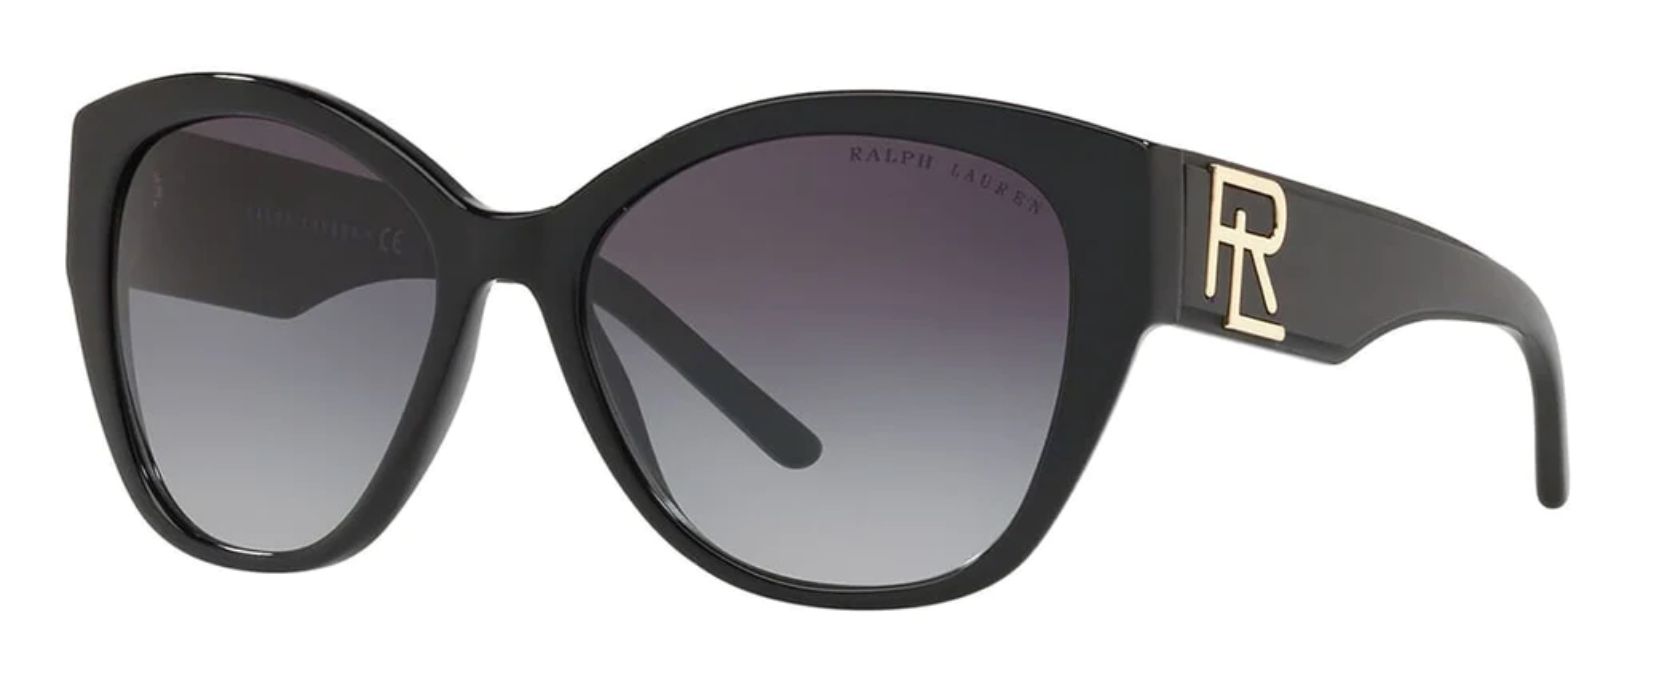 Ralph Lauren Women's Sunglasses Butterfly Black RL816850018G